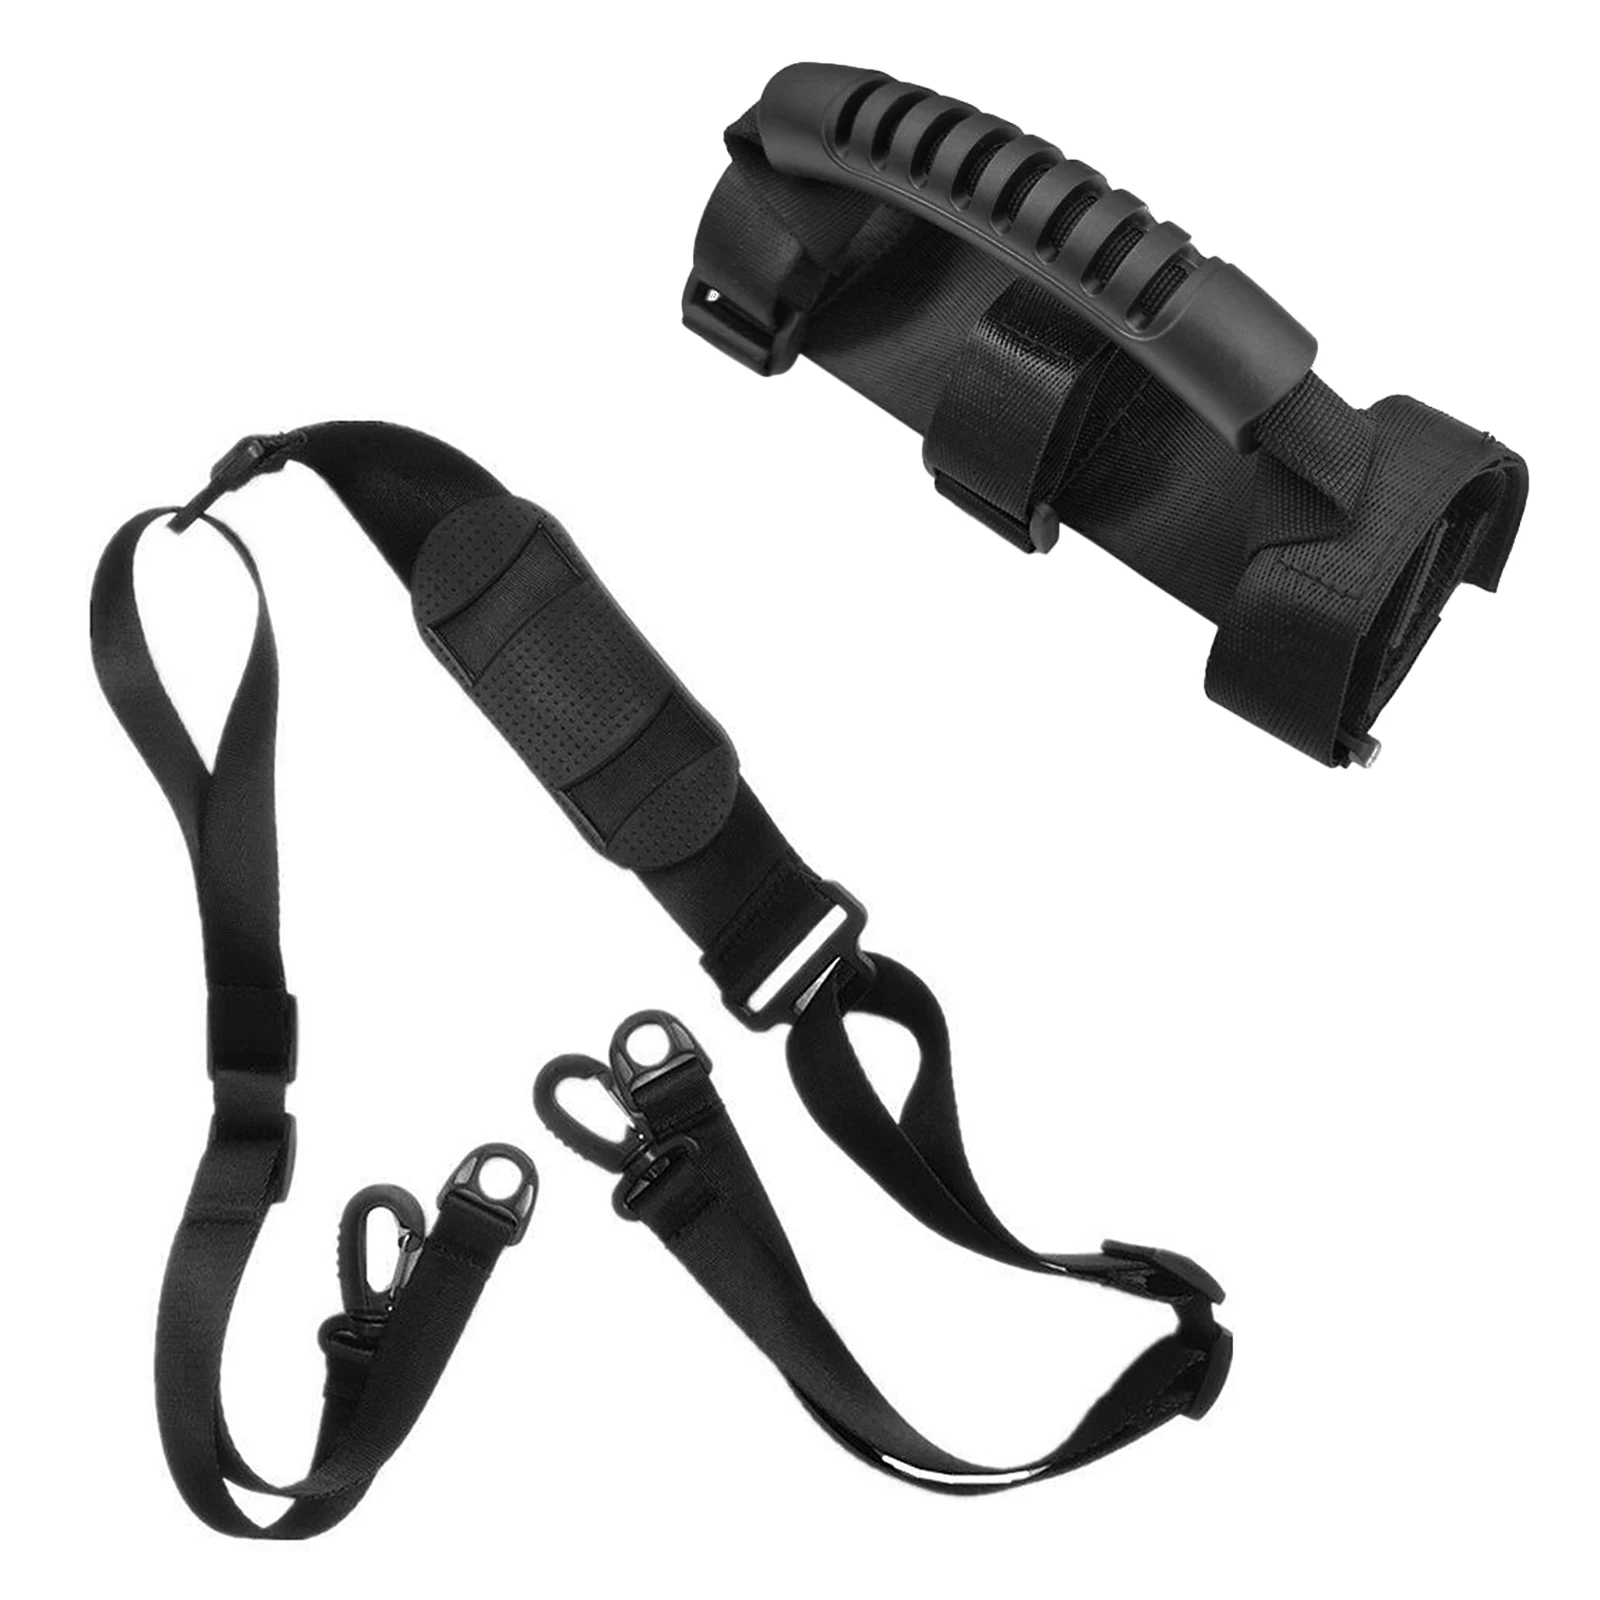 Details about   Strap belt Hand carry Handle Shoulder Black Electric scooter Accessory 